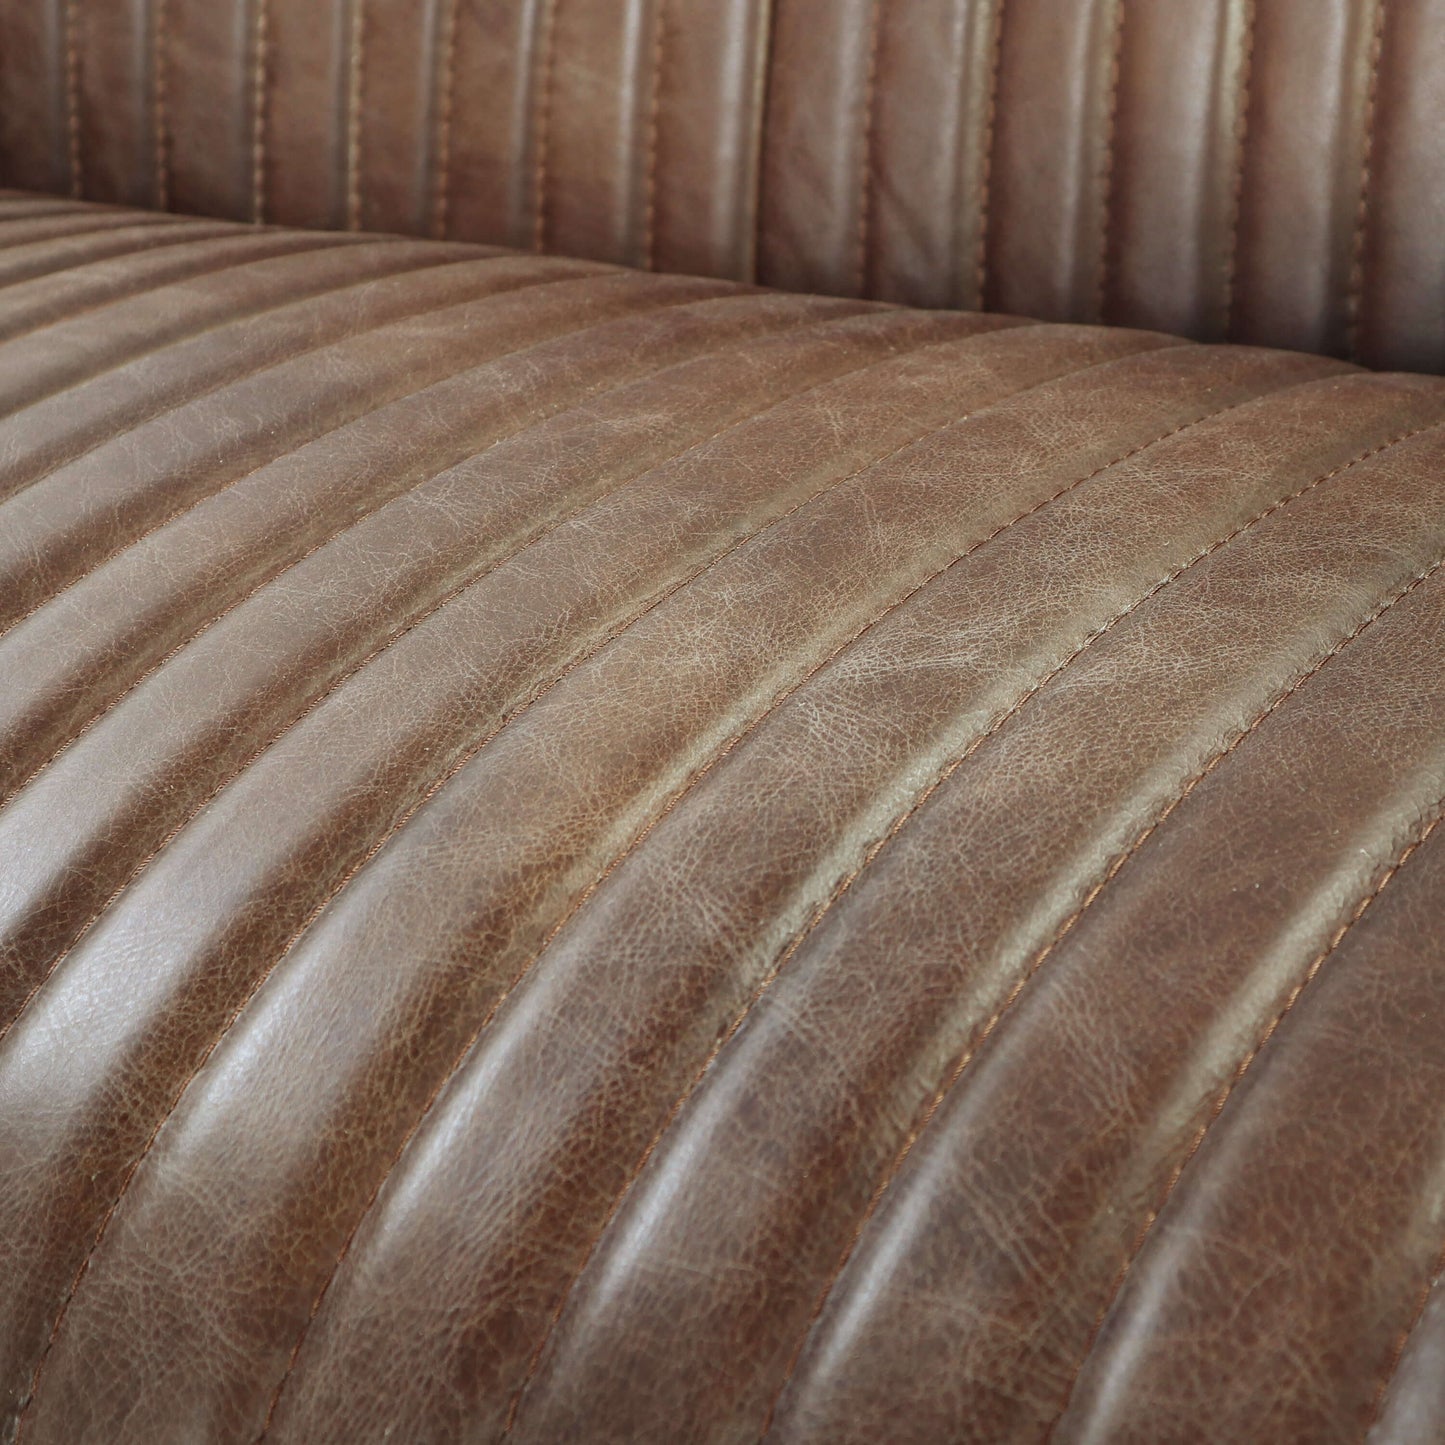 Brancaster Retro Inspired Lounge Chair in Brown Top Grain Leather & Aluminum - Revel Sofa 